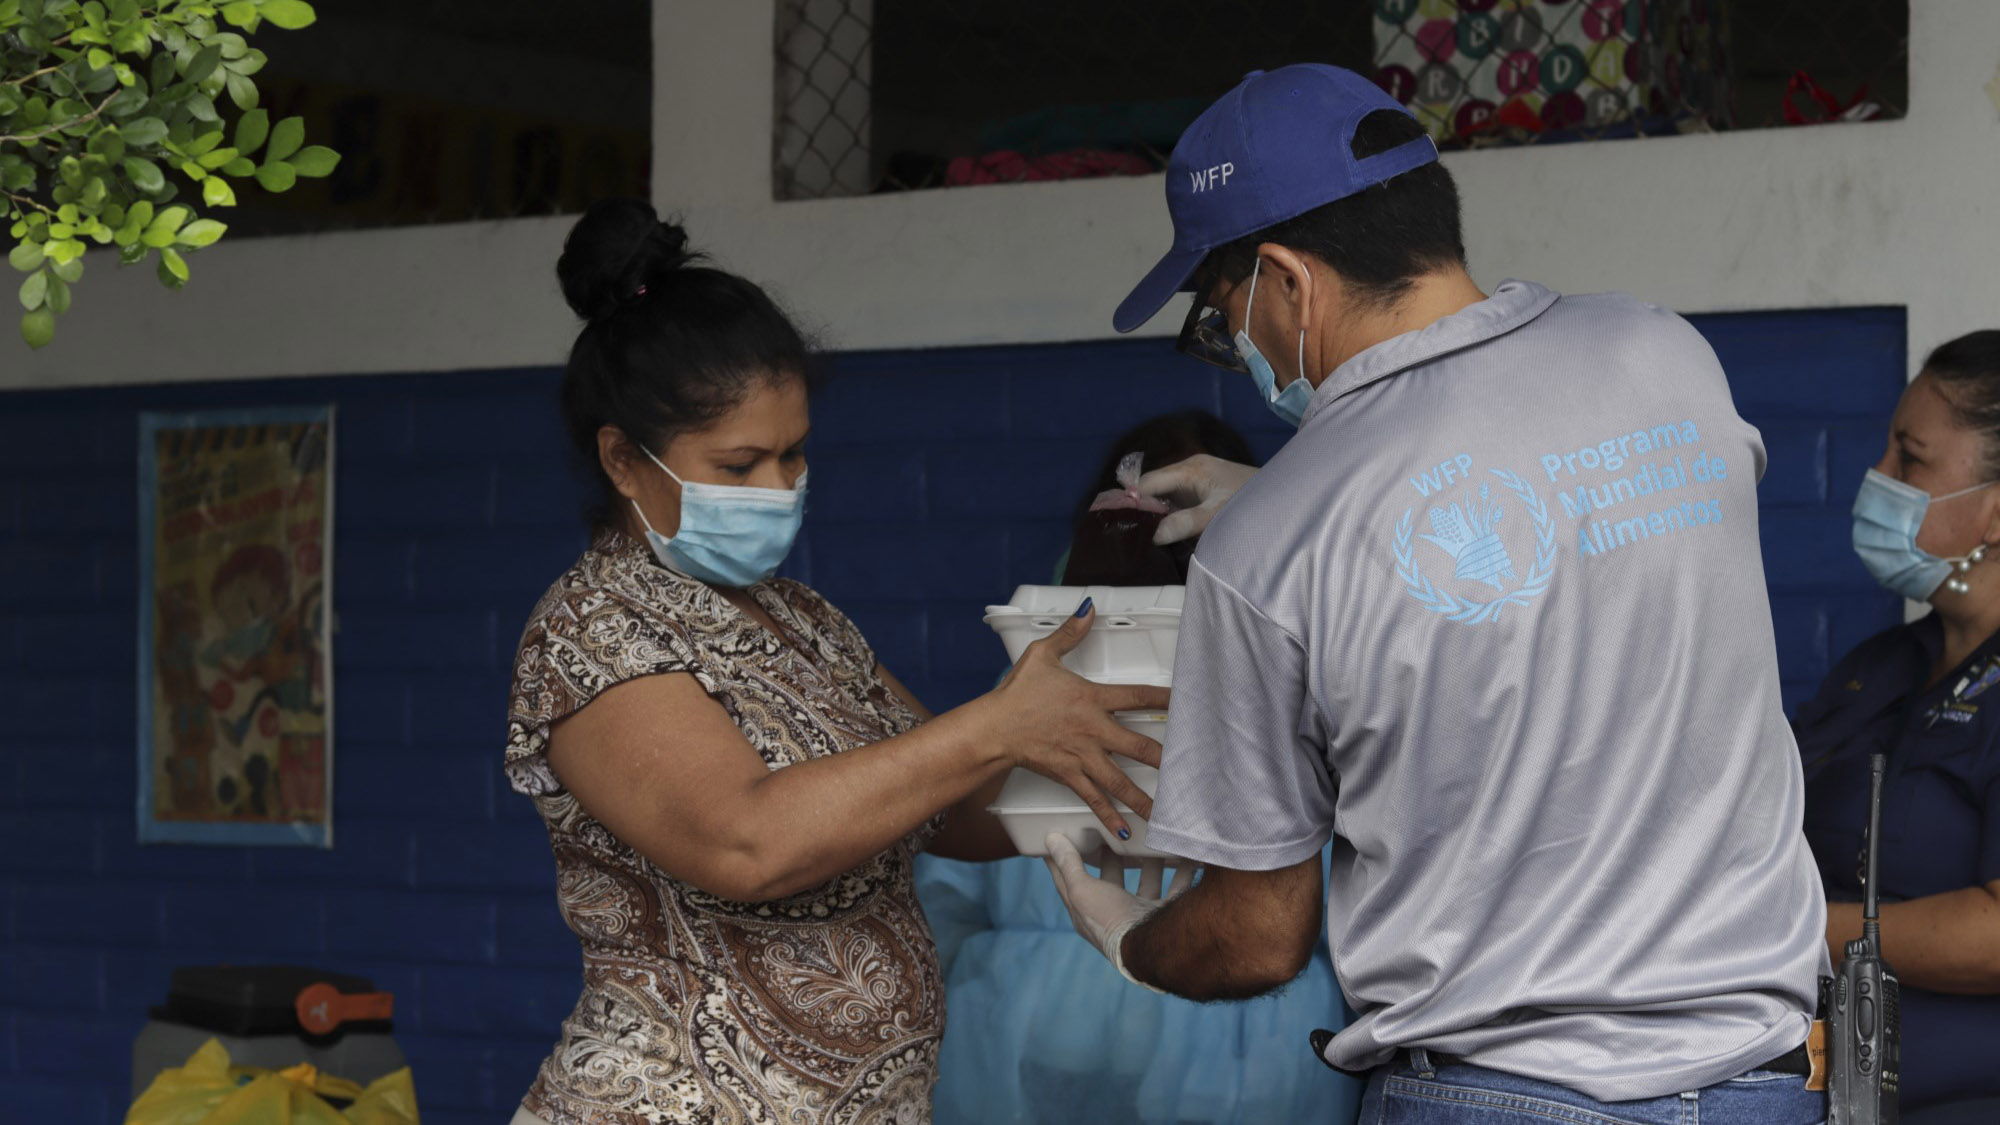 A World Food Programme staff member handing food to a woman in El Salvador.